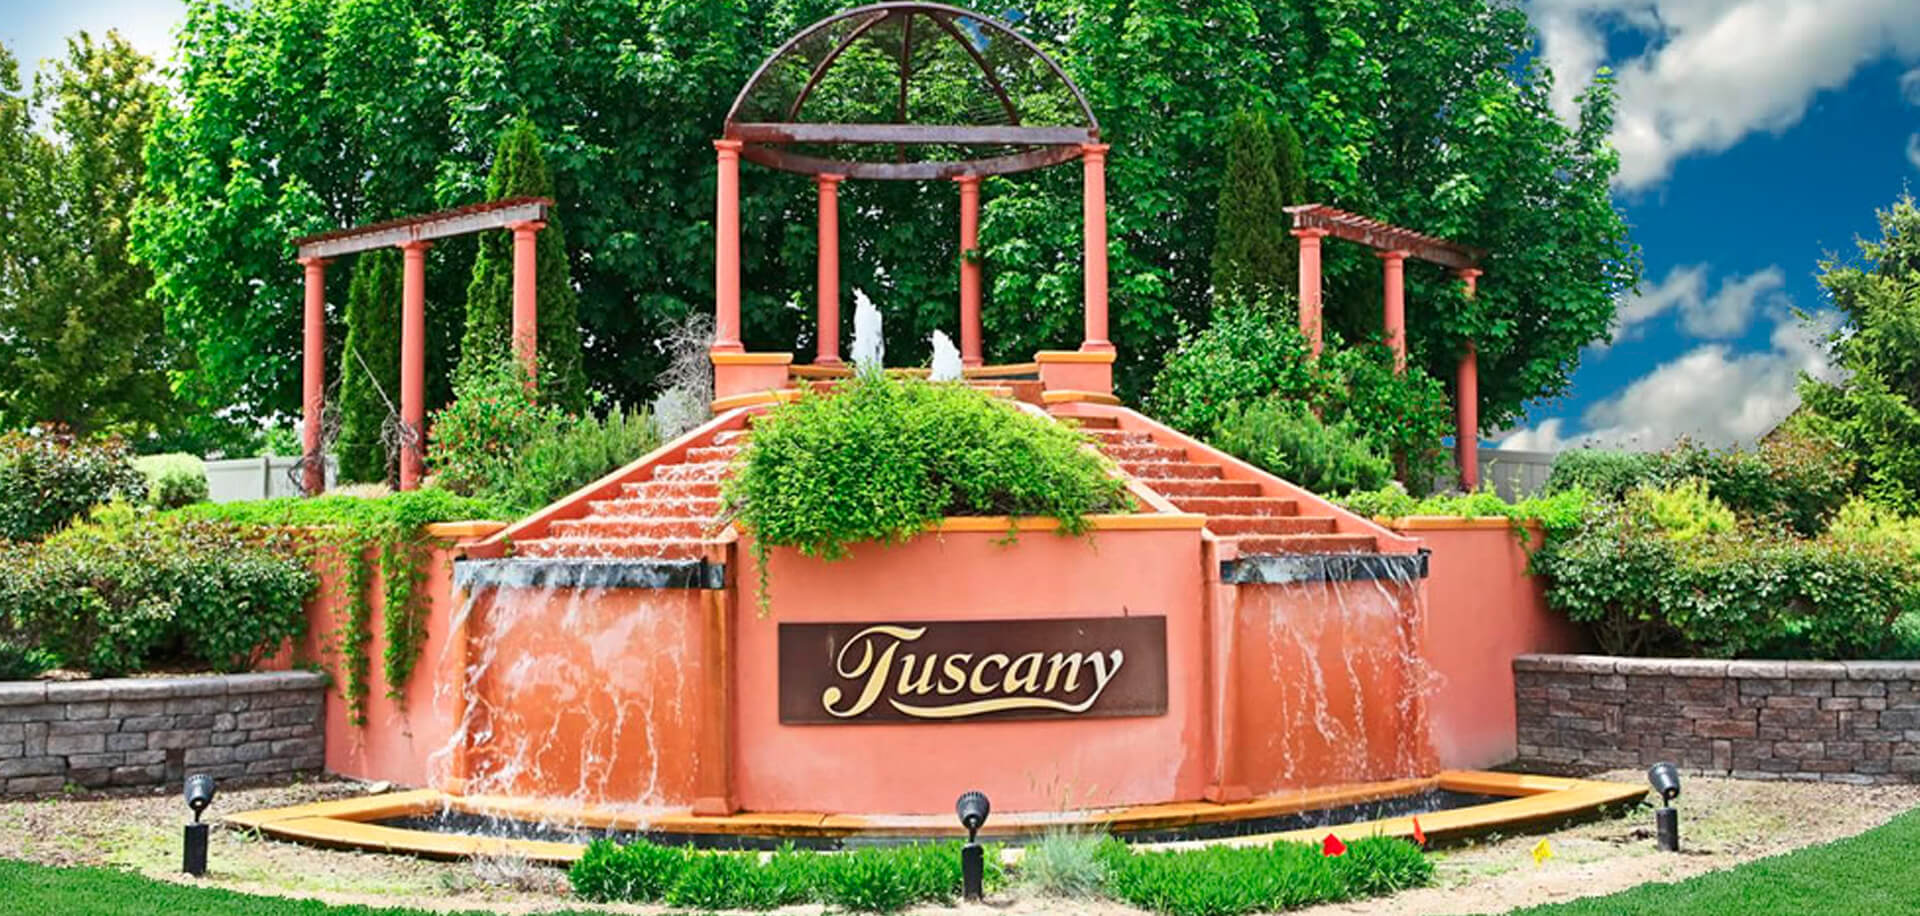 Tuscany Subdivision entrance